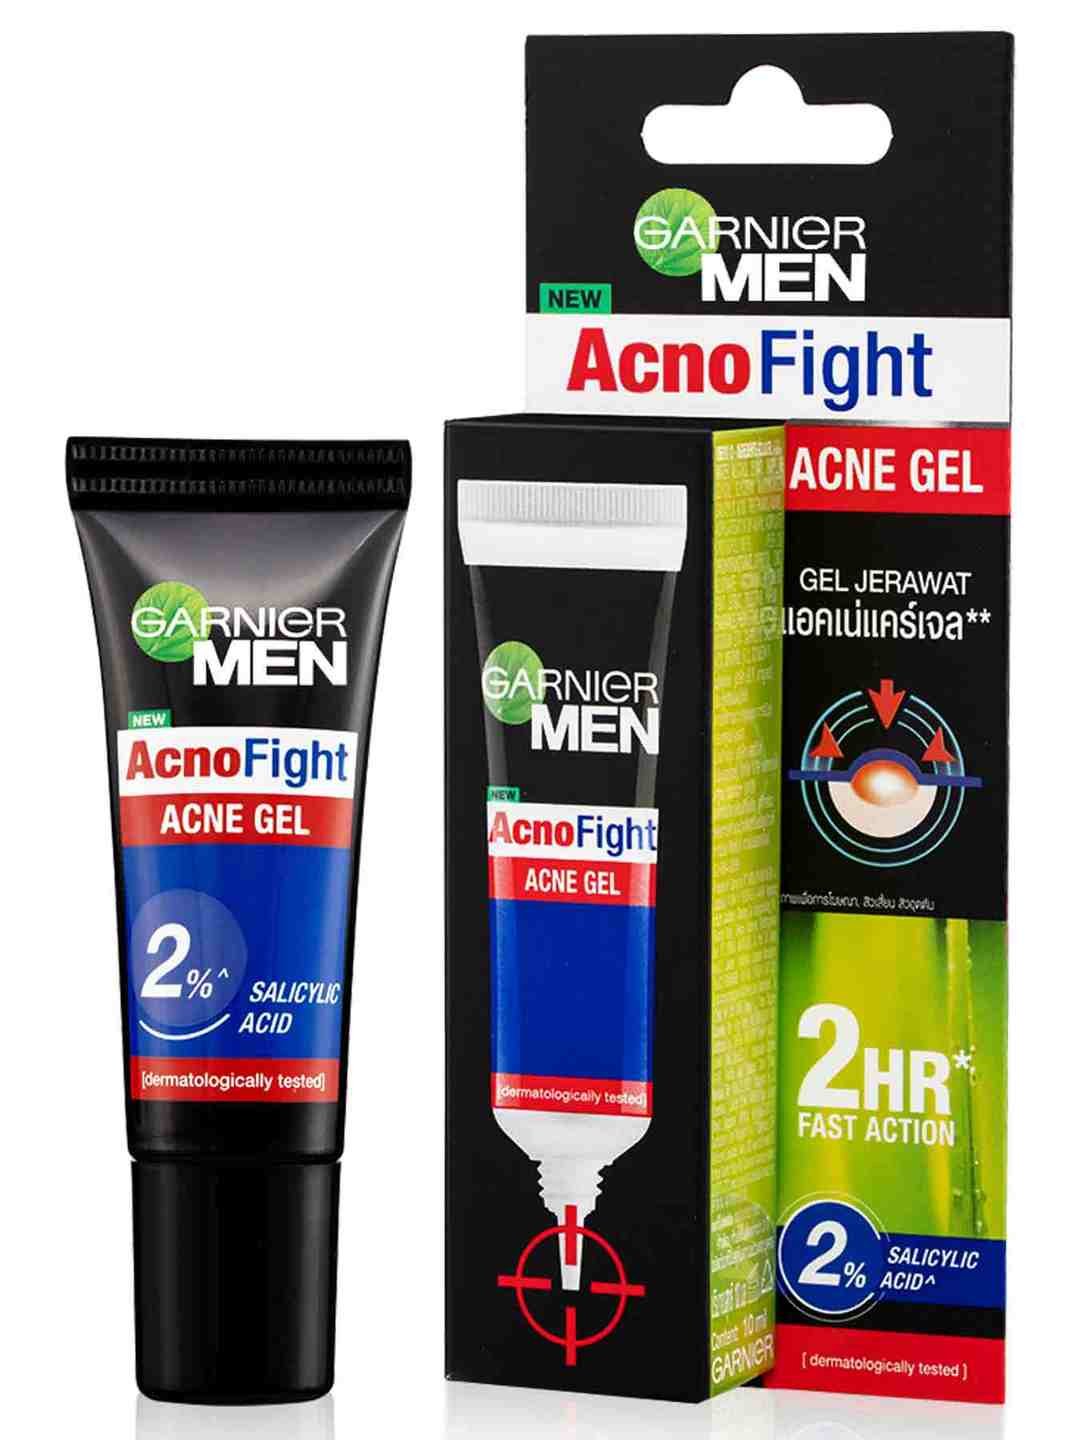 acno fight acnofight gel 8994993003228_t4-min